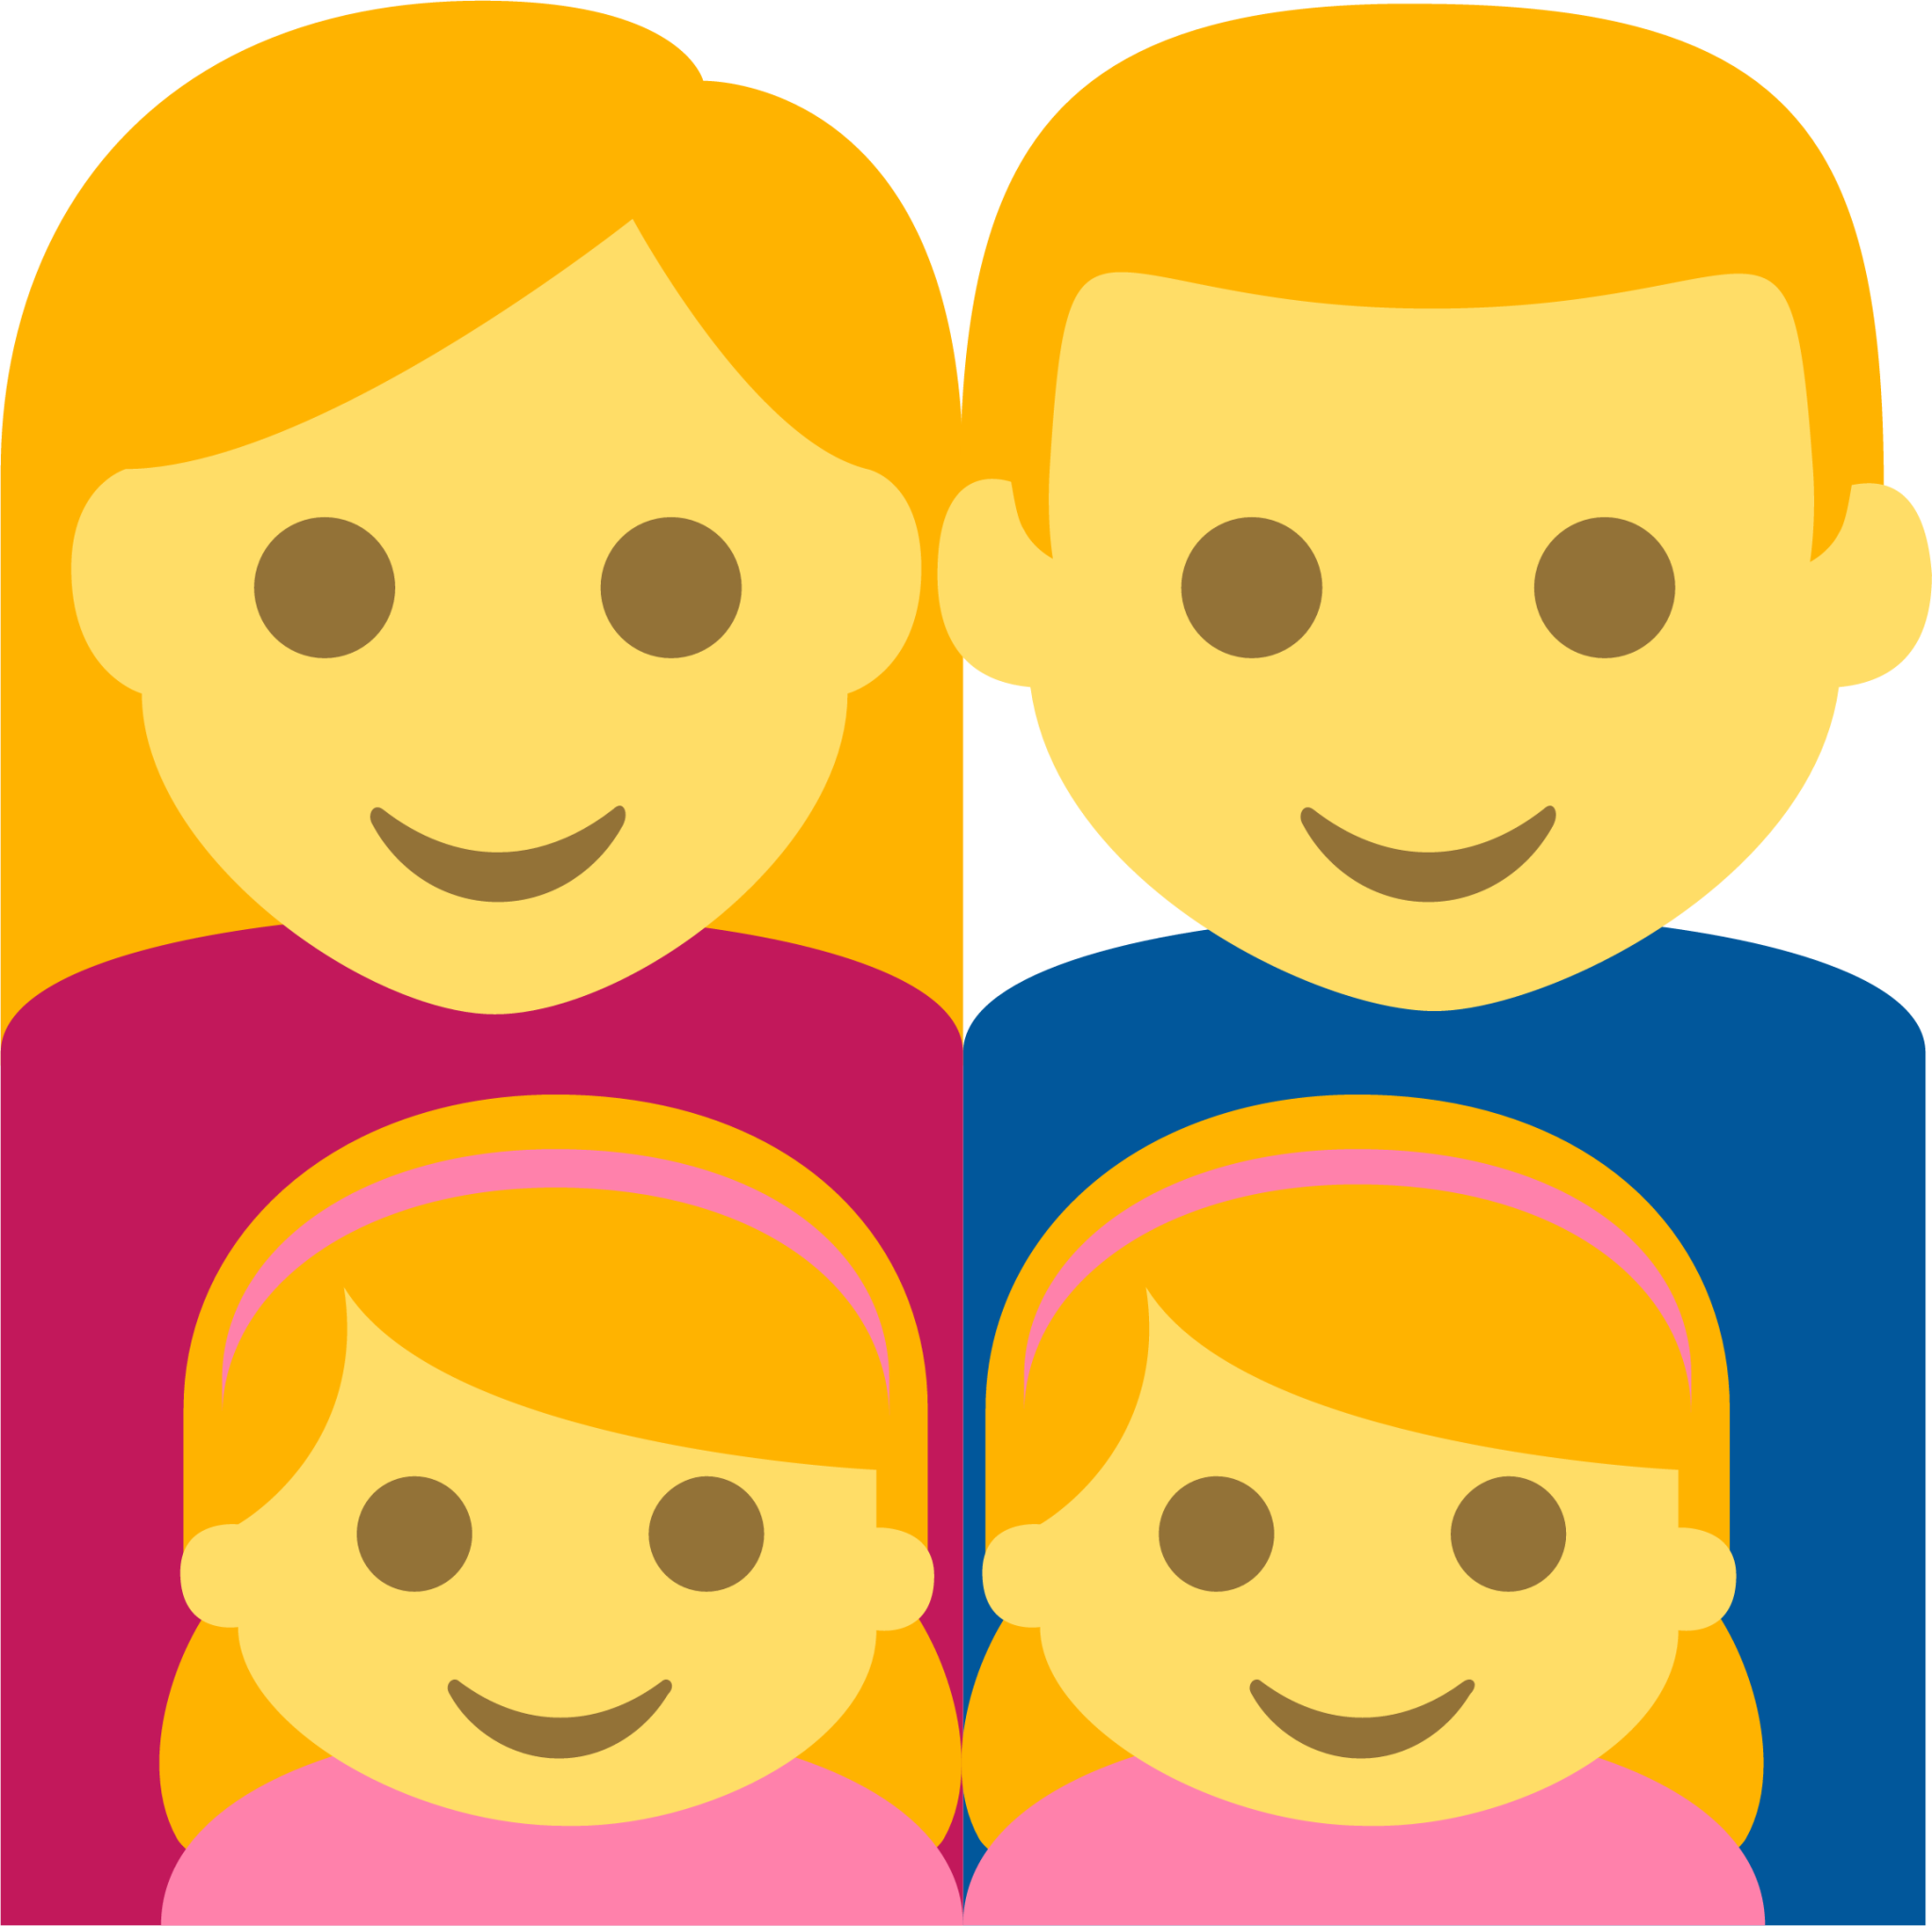 family (man,woman,girl,girl) emoji